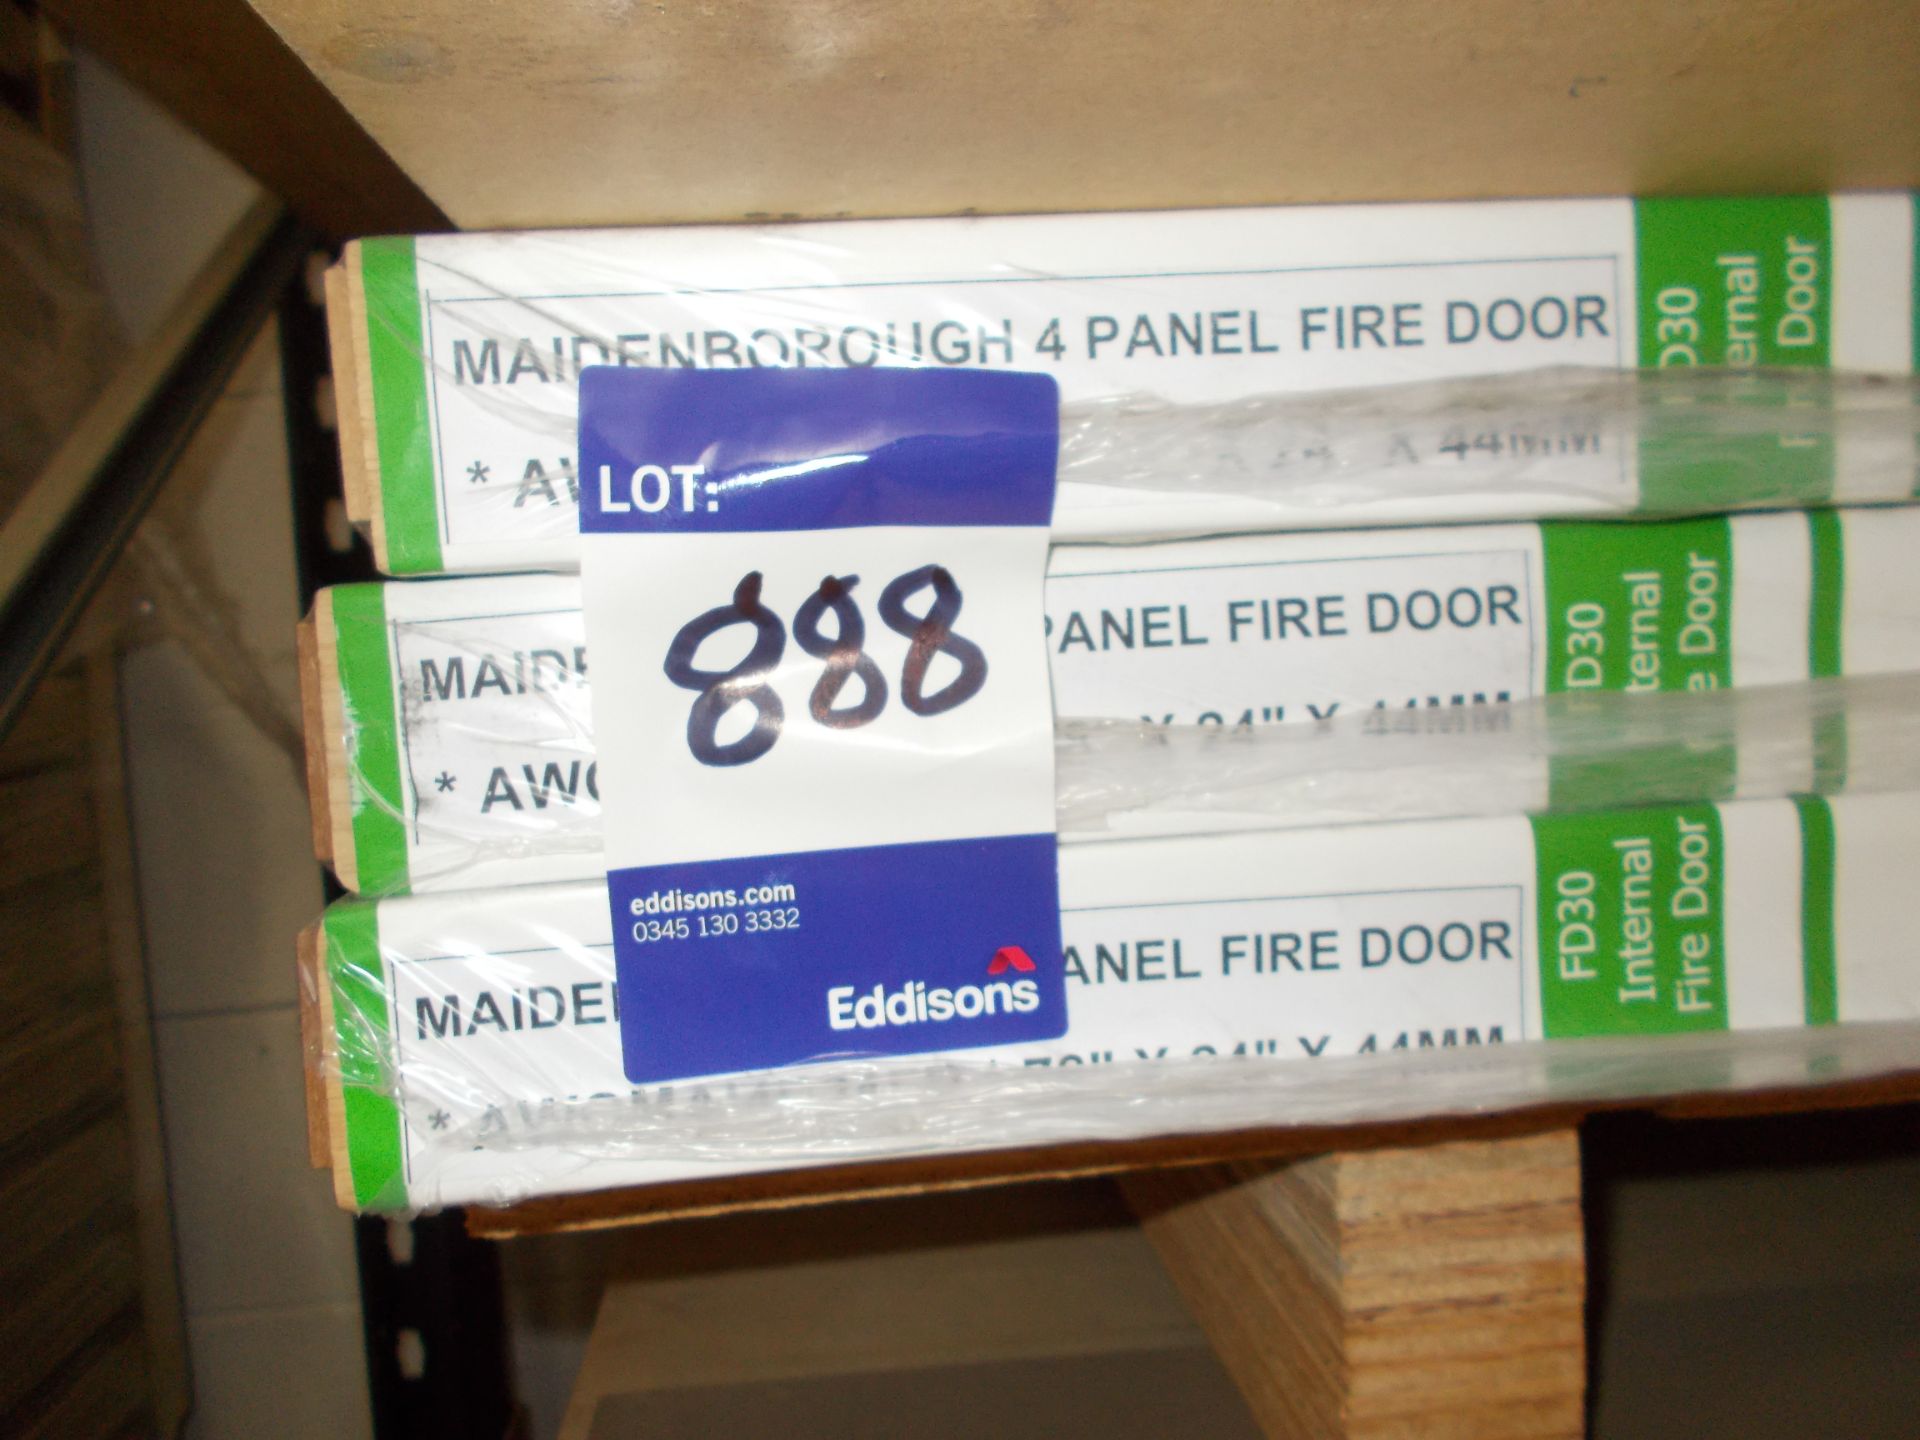 3 x Maidenborough 4 Panel Fire Door AWOMA14P24FD 78”x24”x44mm - Image 3 of 3